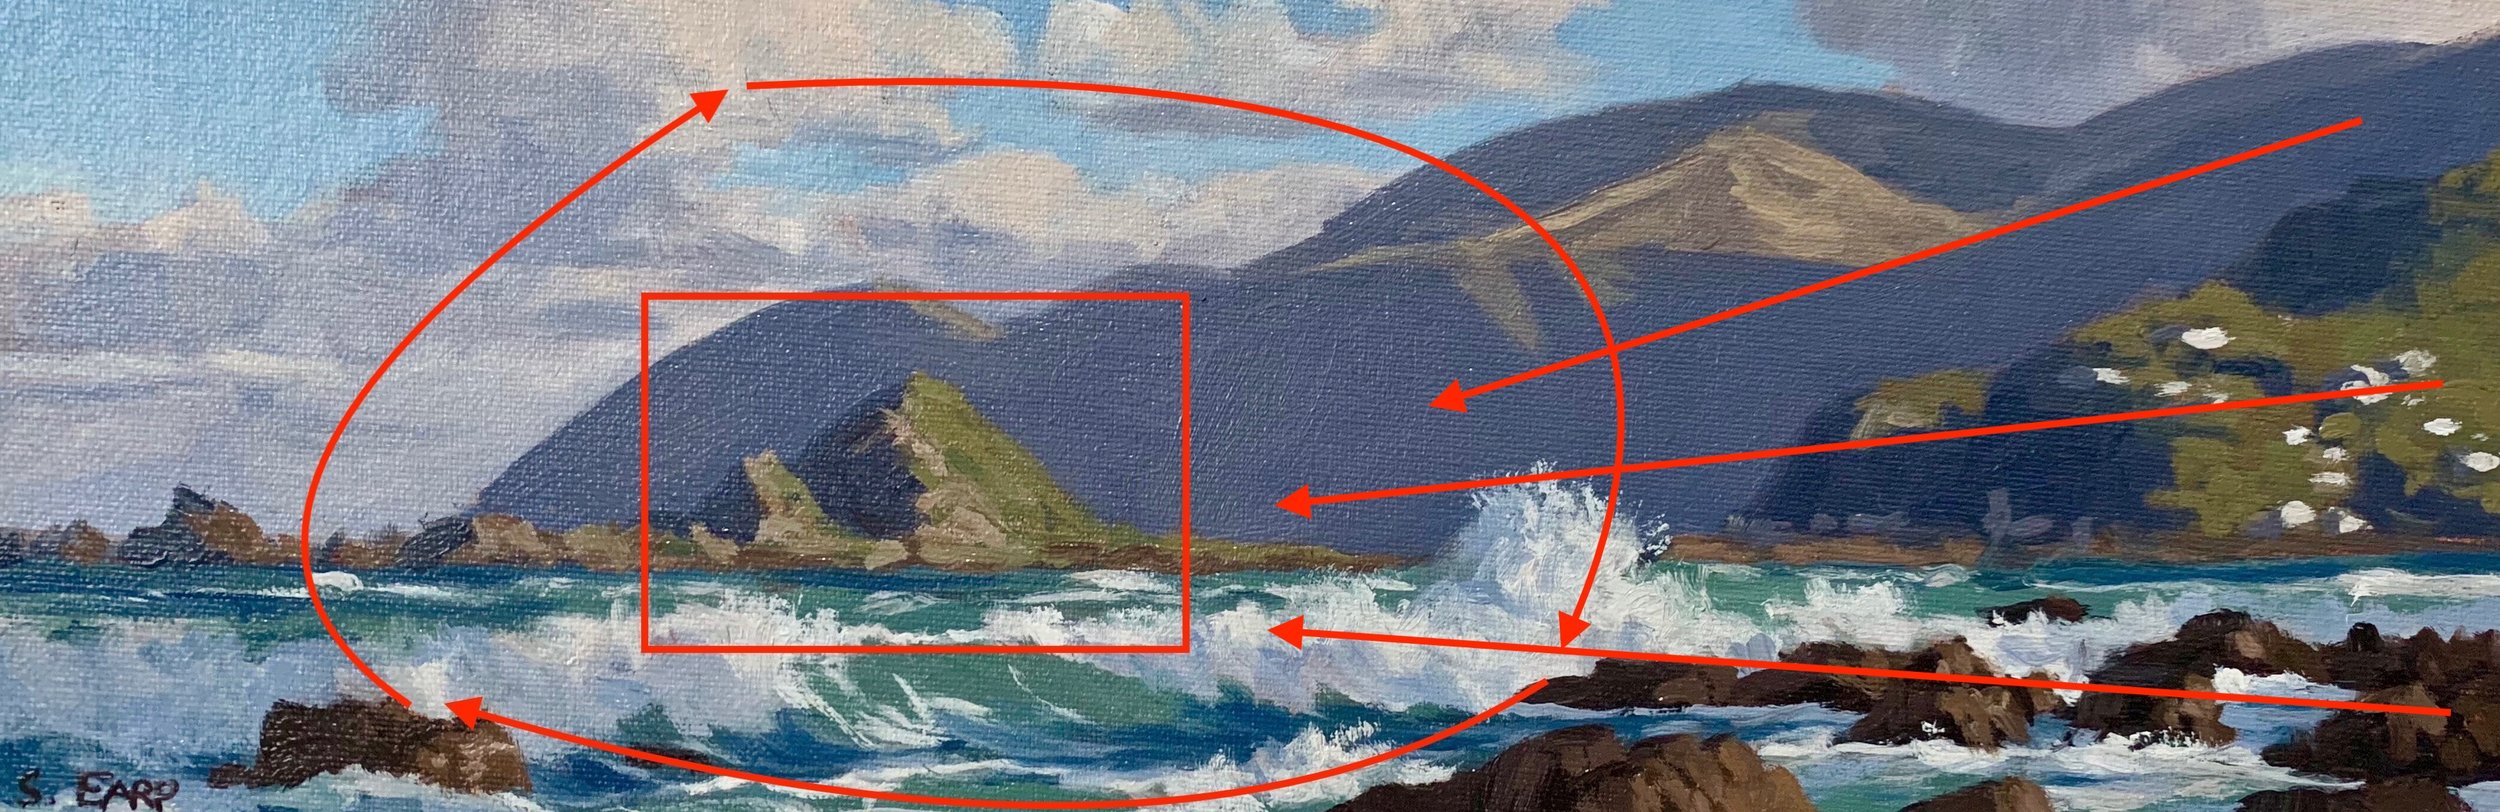 Wellington Coast - small oil painting - Samuel Earp - seascape artist - composition 5.jpg